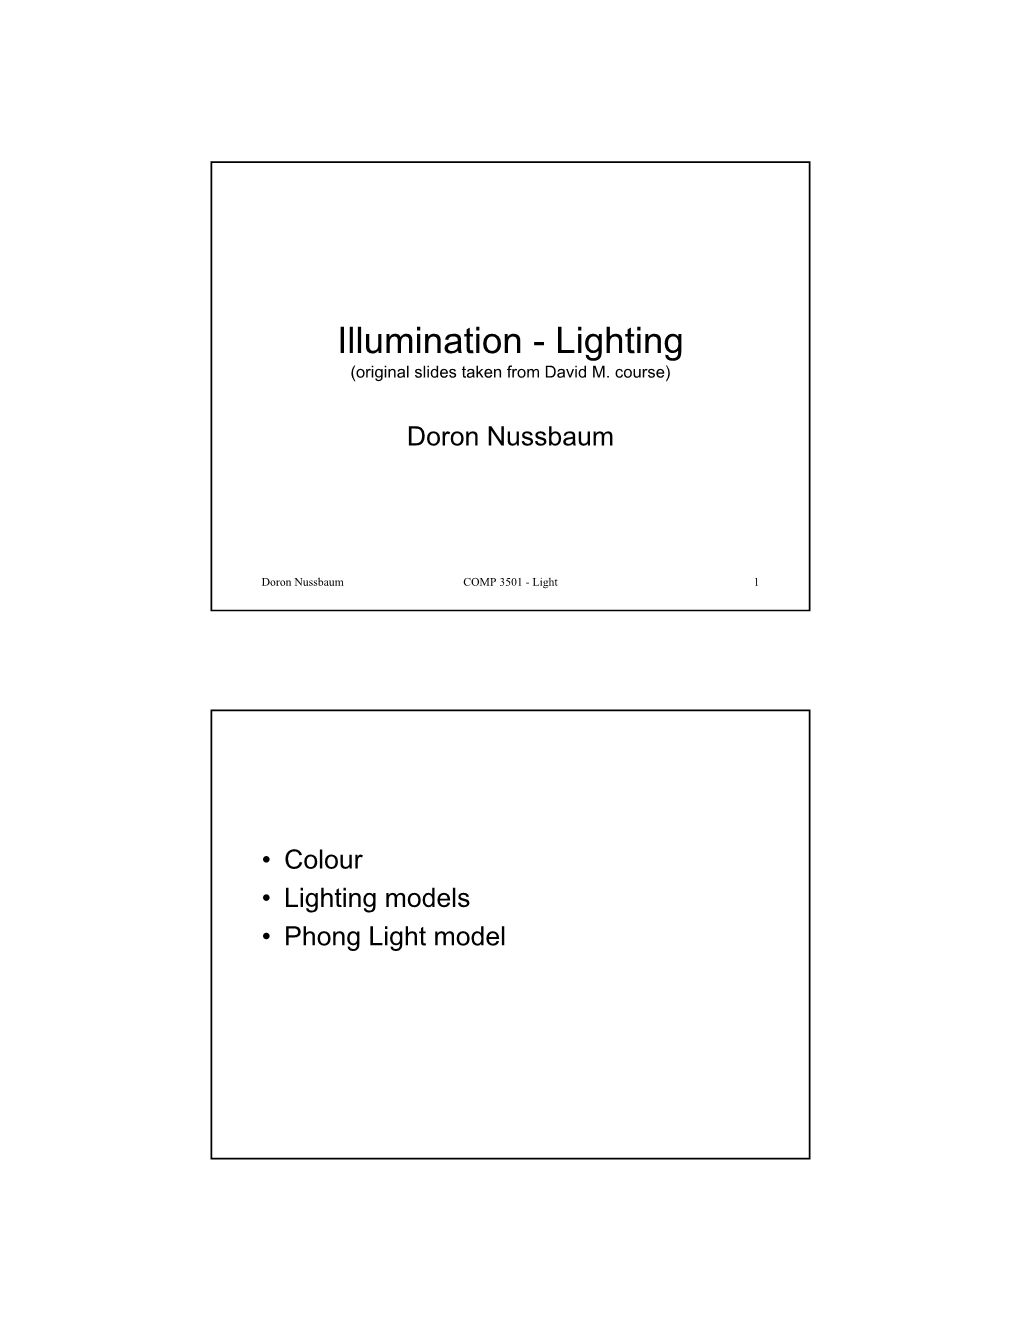 Illumination - Lighting (Original Slides Taken from David M